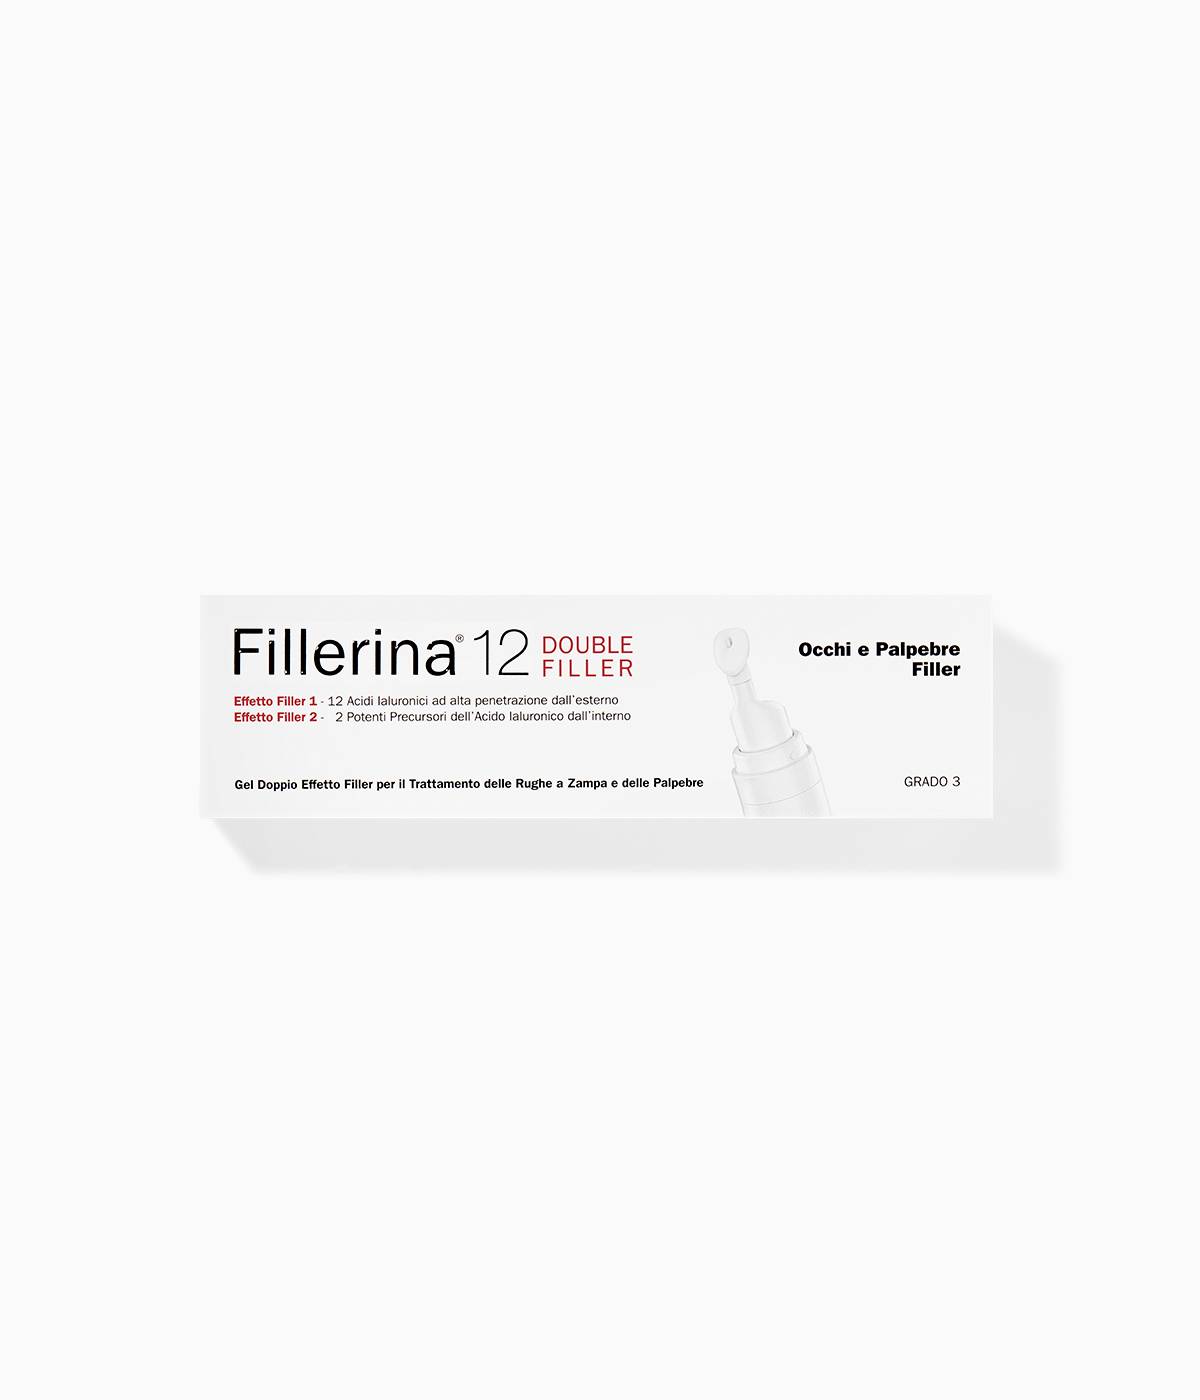 Labo-fillerina-12-double-filler-eyes-eyelids-restructuring-anti-wrinkle-pharmaflorence